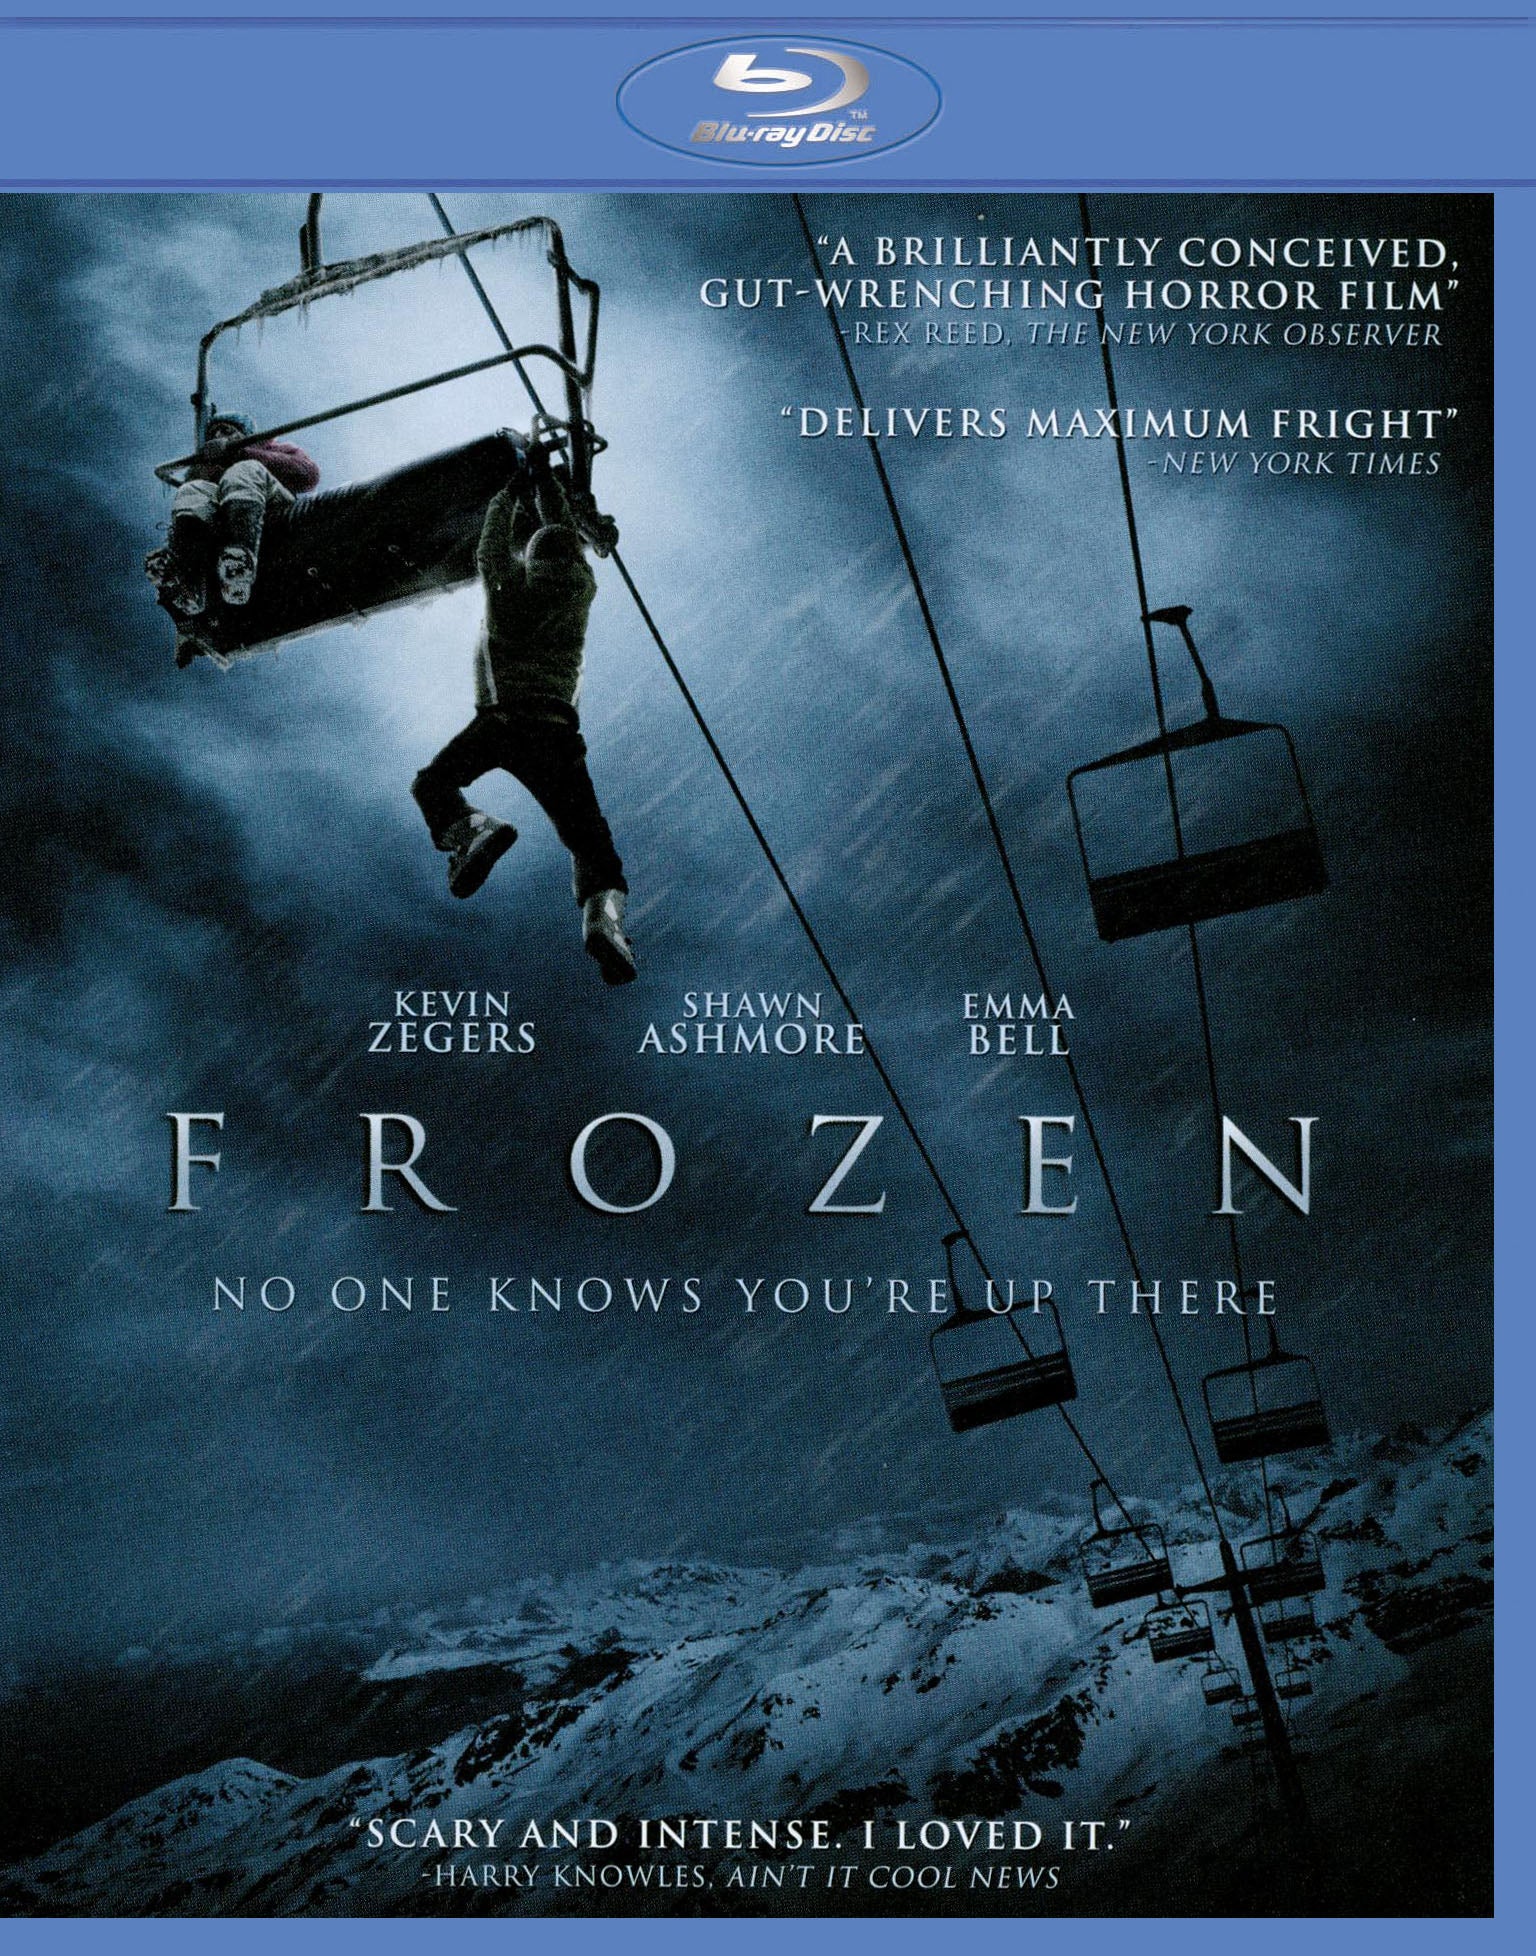 Frozen [Blu-ray] cover art